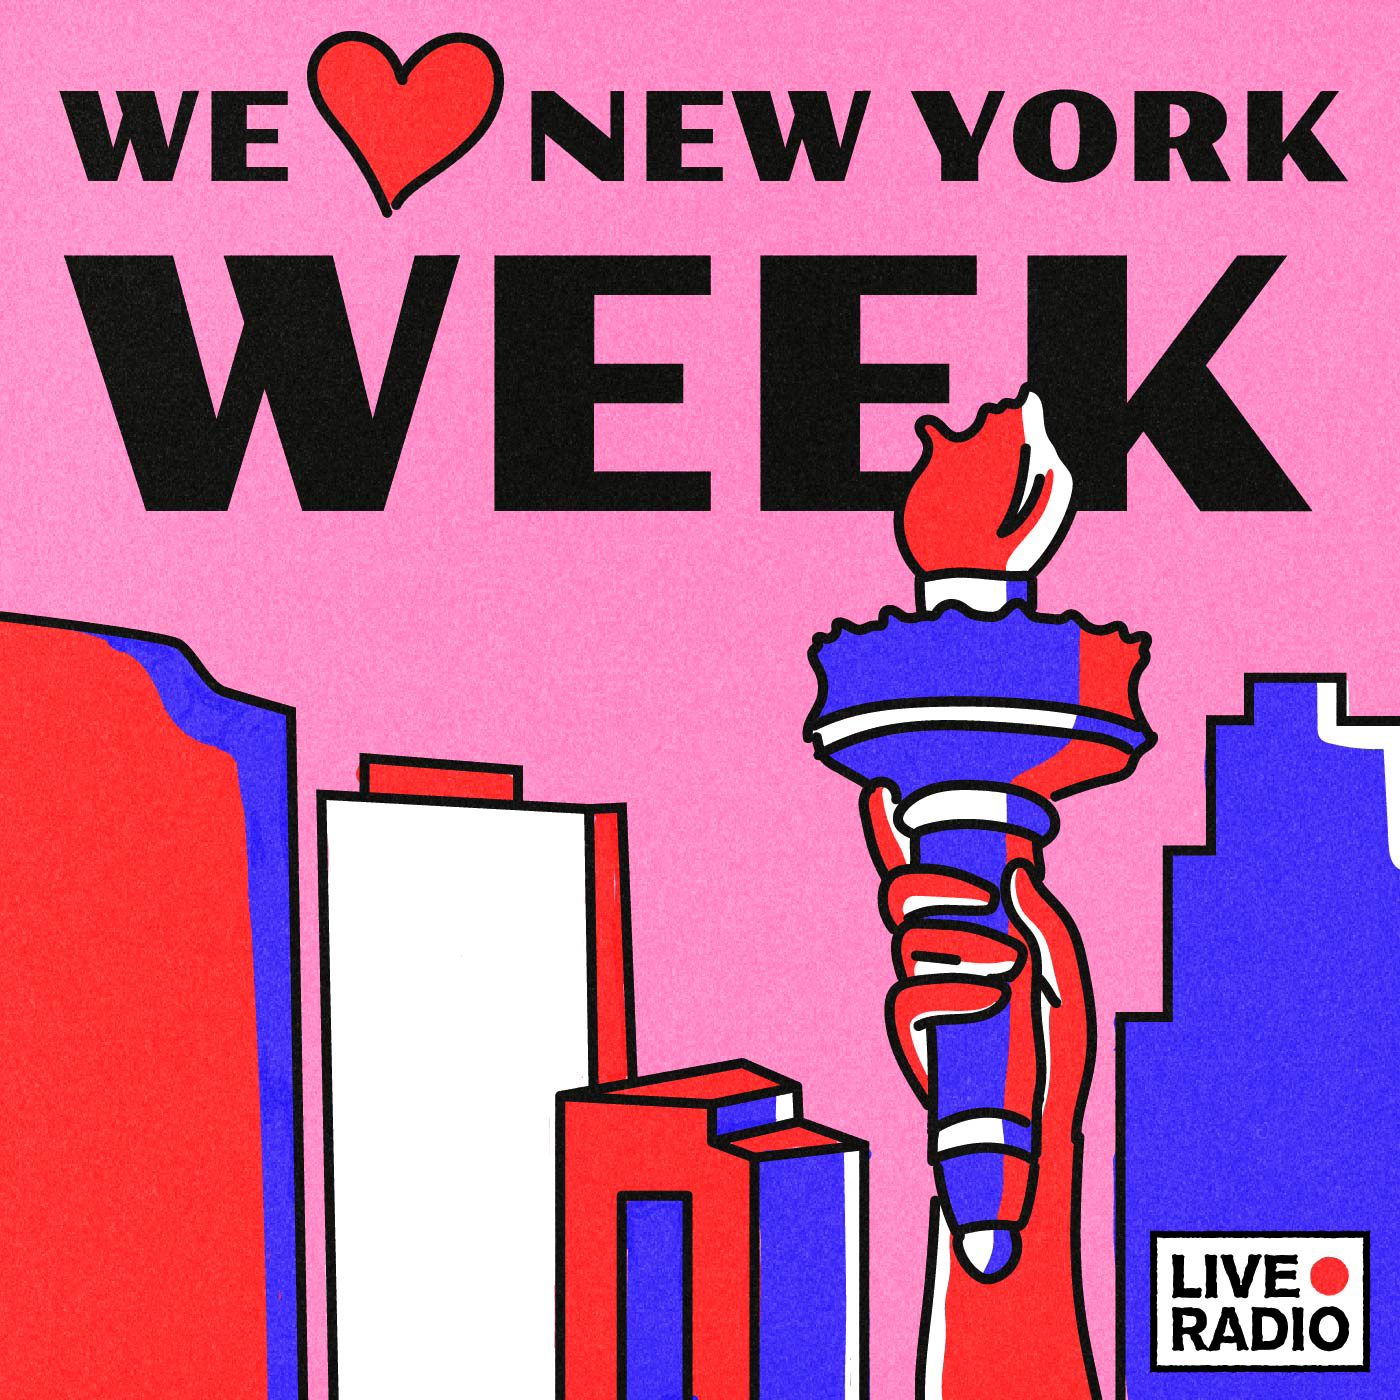 I Heart New York Week